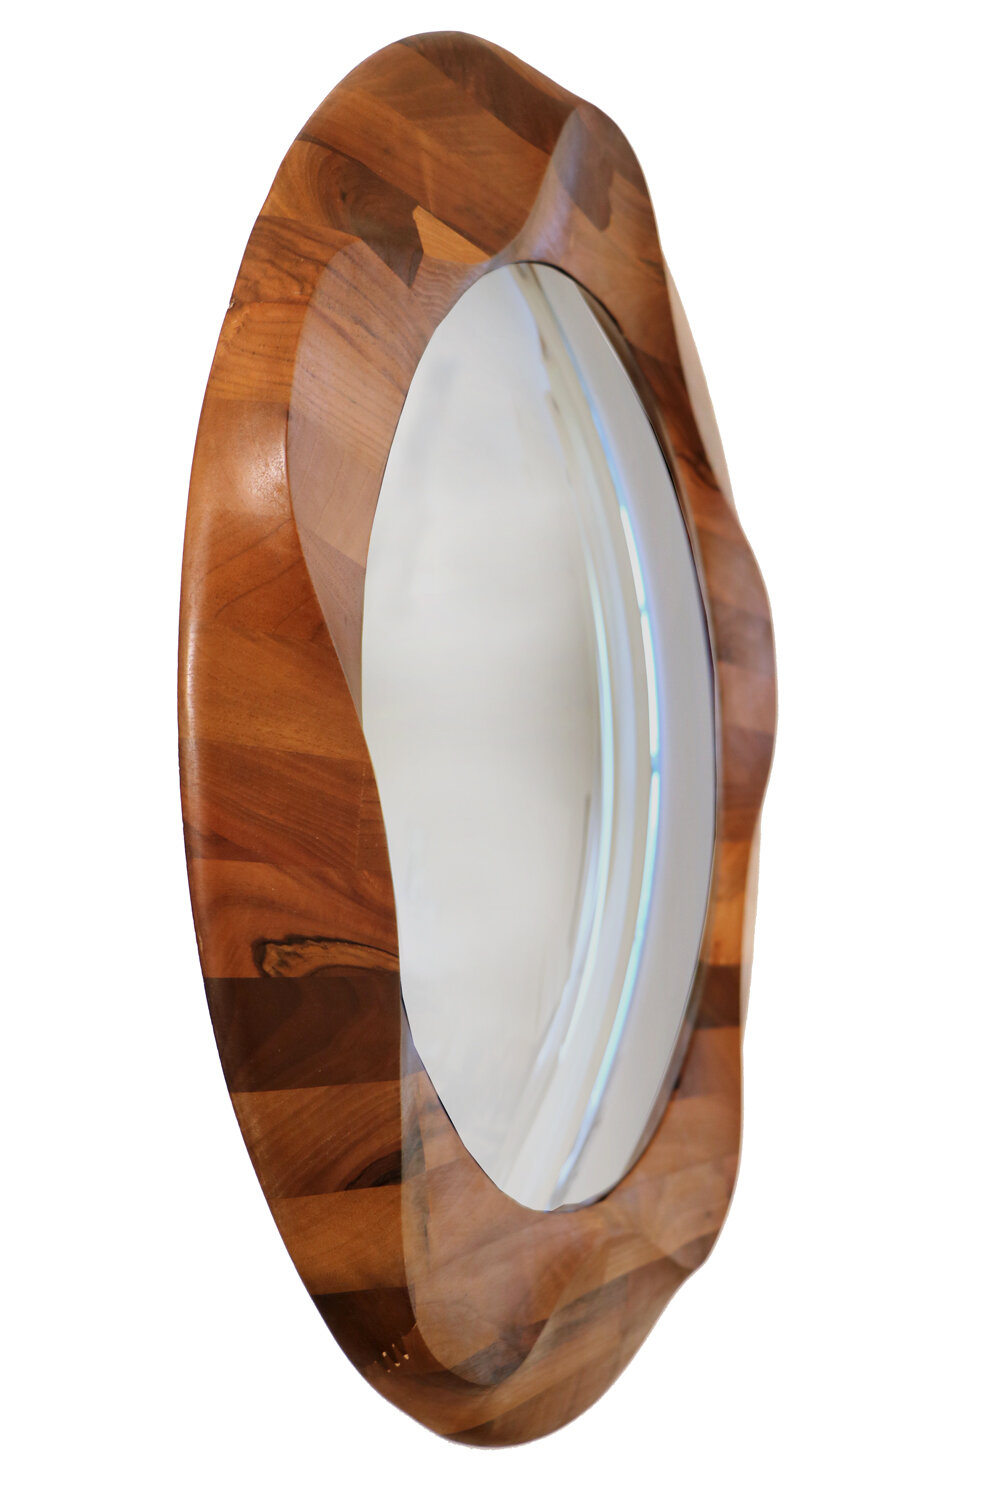 Convex mirror with walnut frame